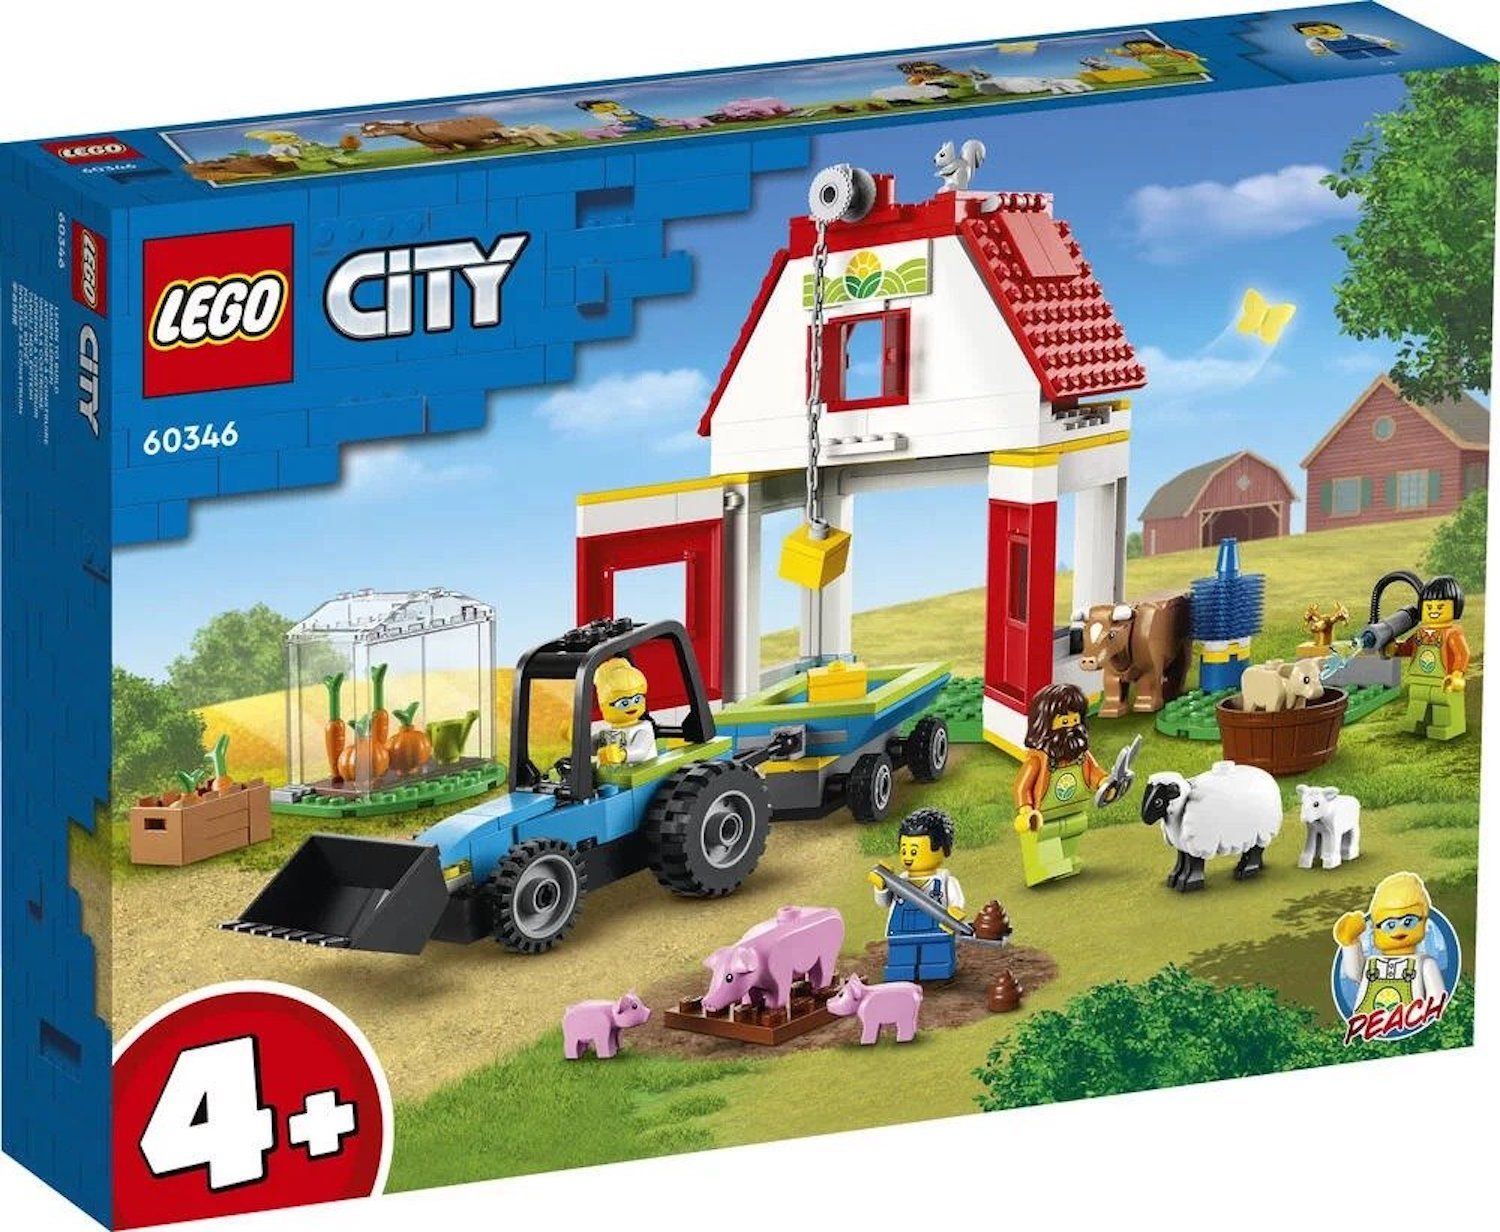 New LEGO City Farm Sets Revealed! â The Brick Post!